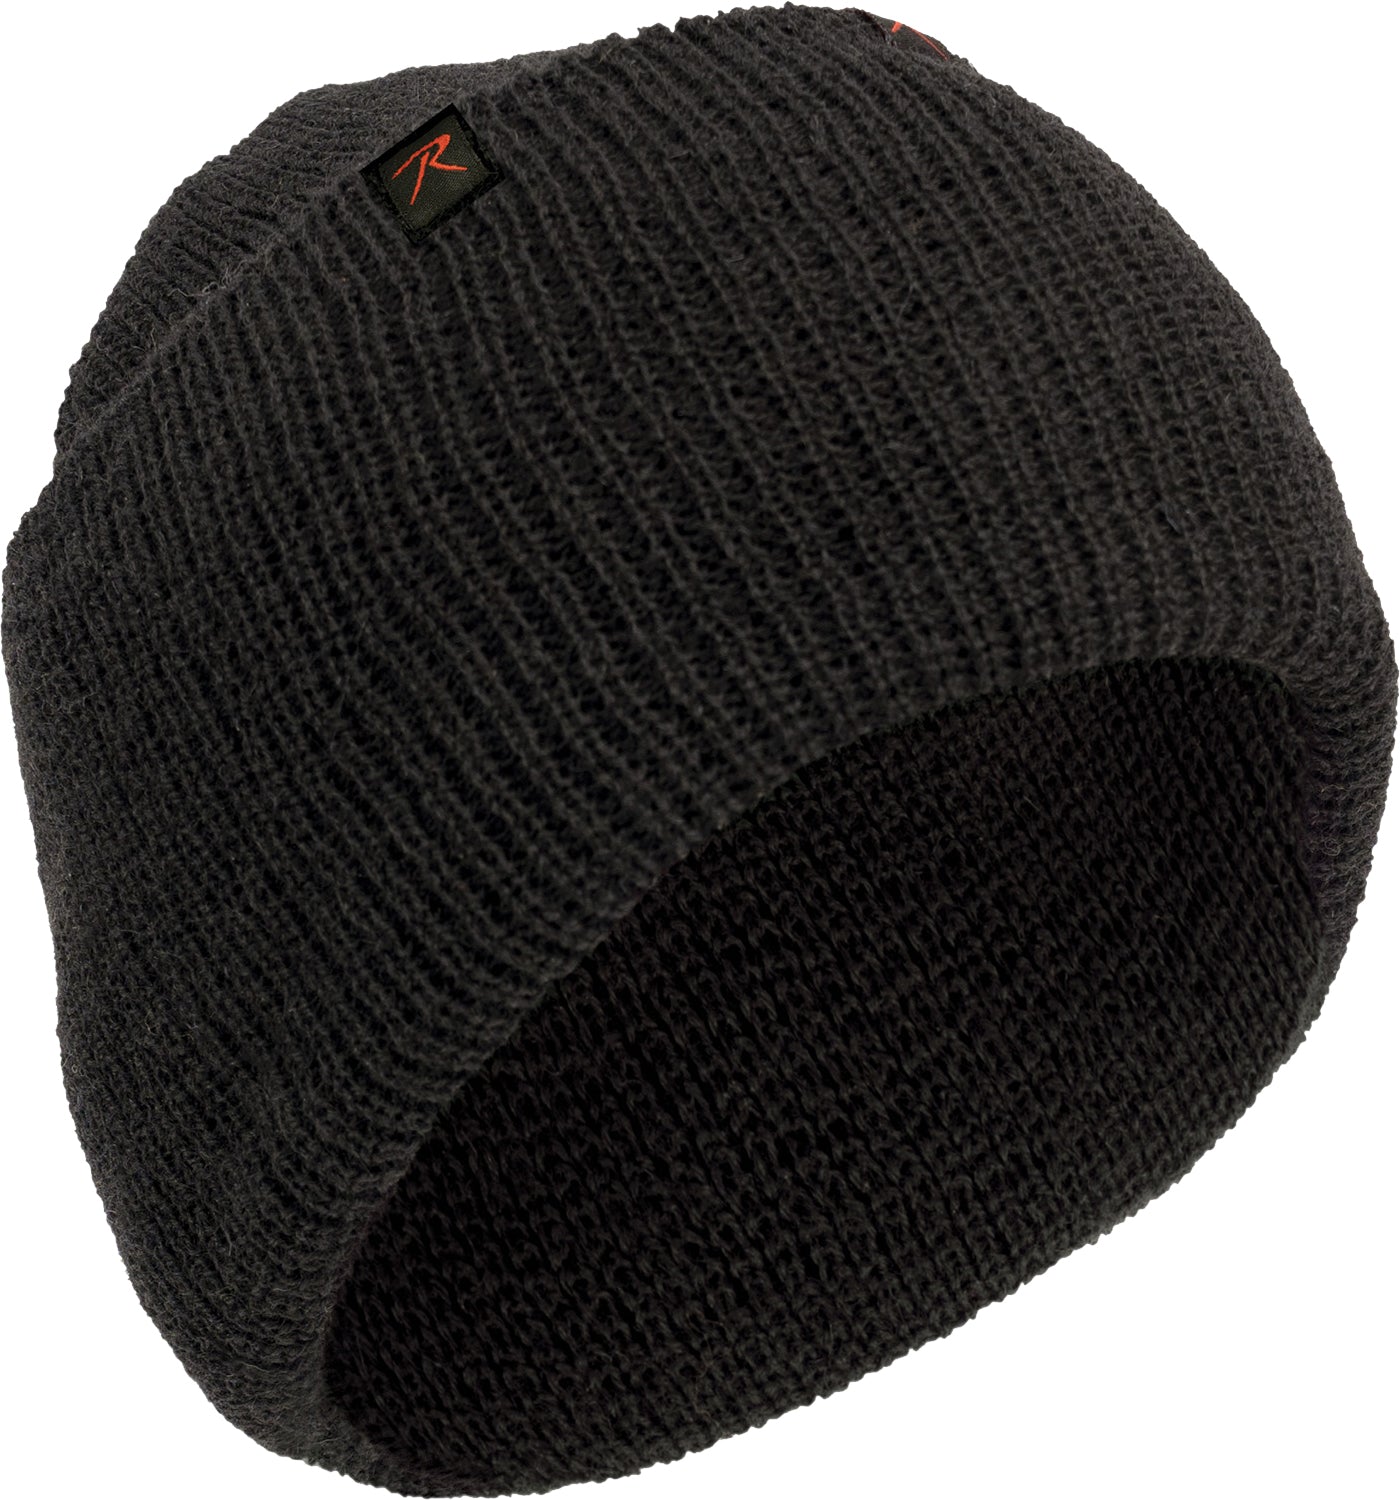 Black 100% Wool Watch Cap